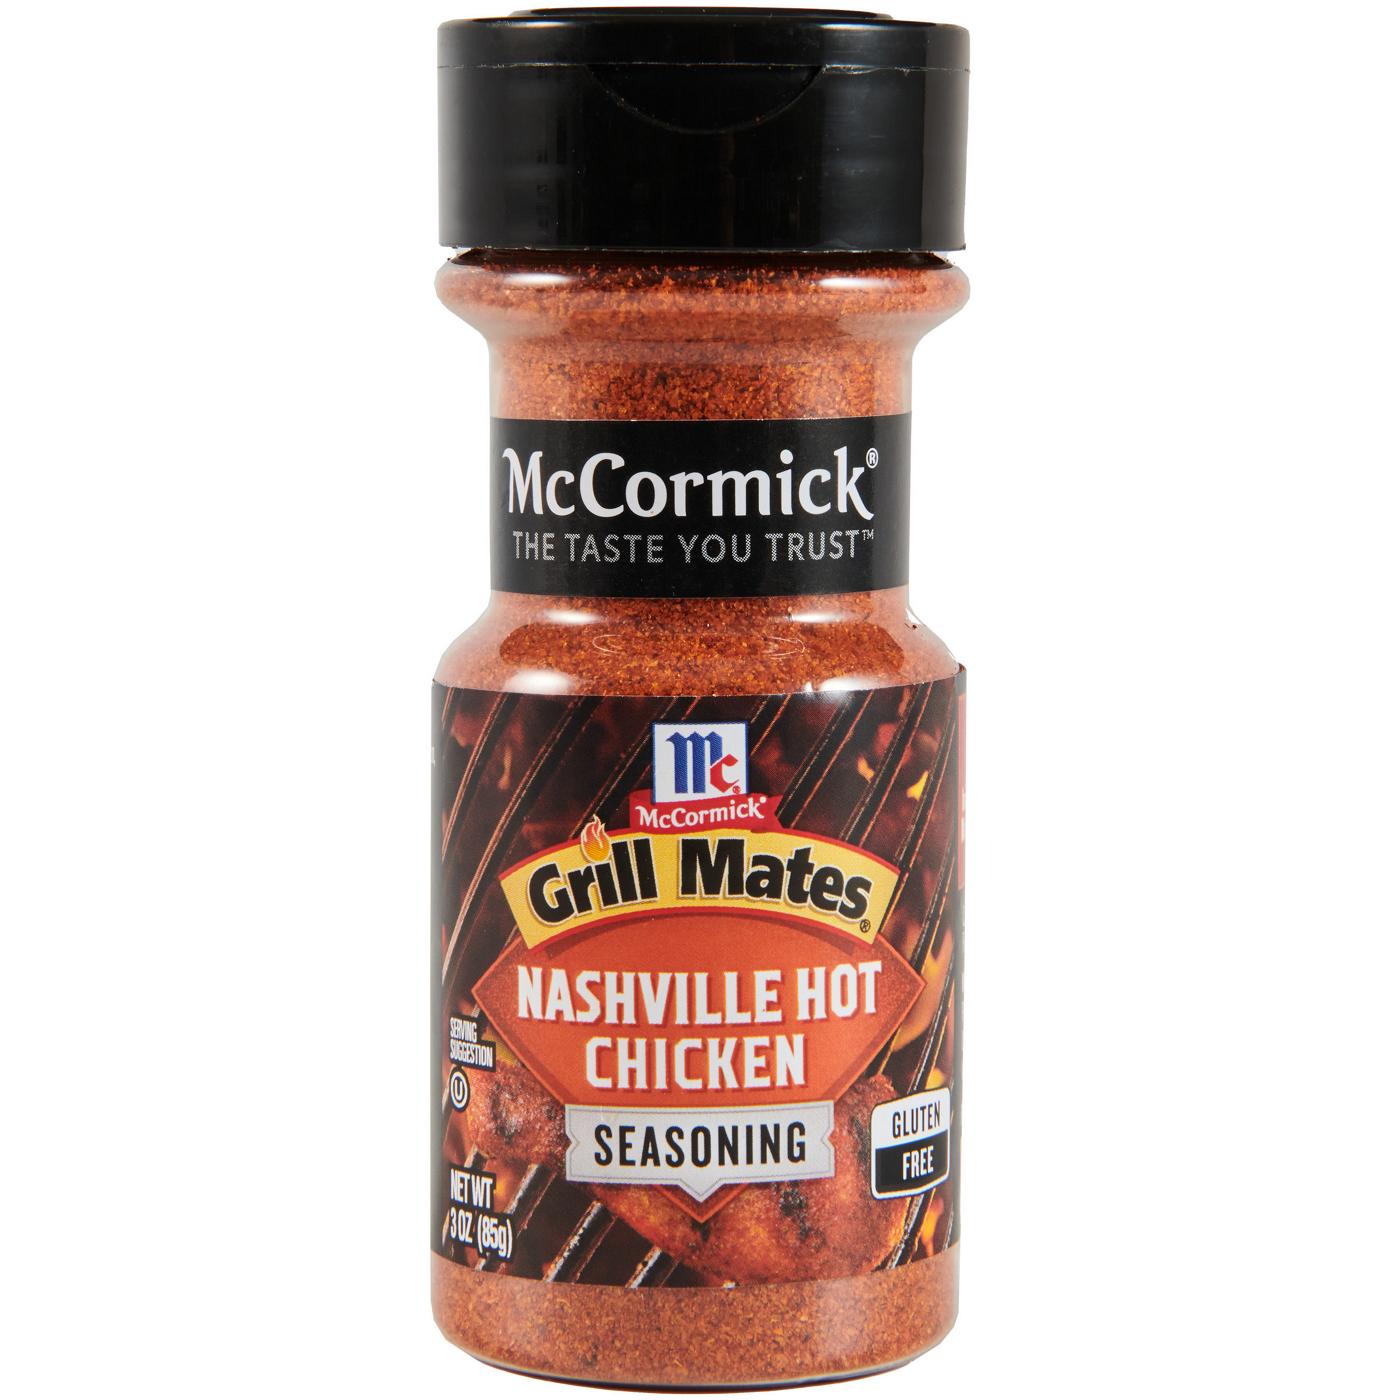 McCormick Grill Mates Nashville Hot Chicken Seasoning; image 1 of 2